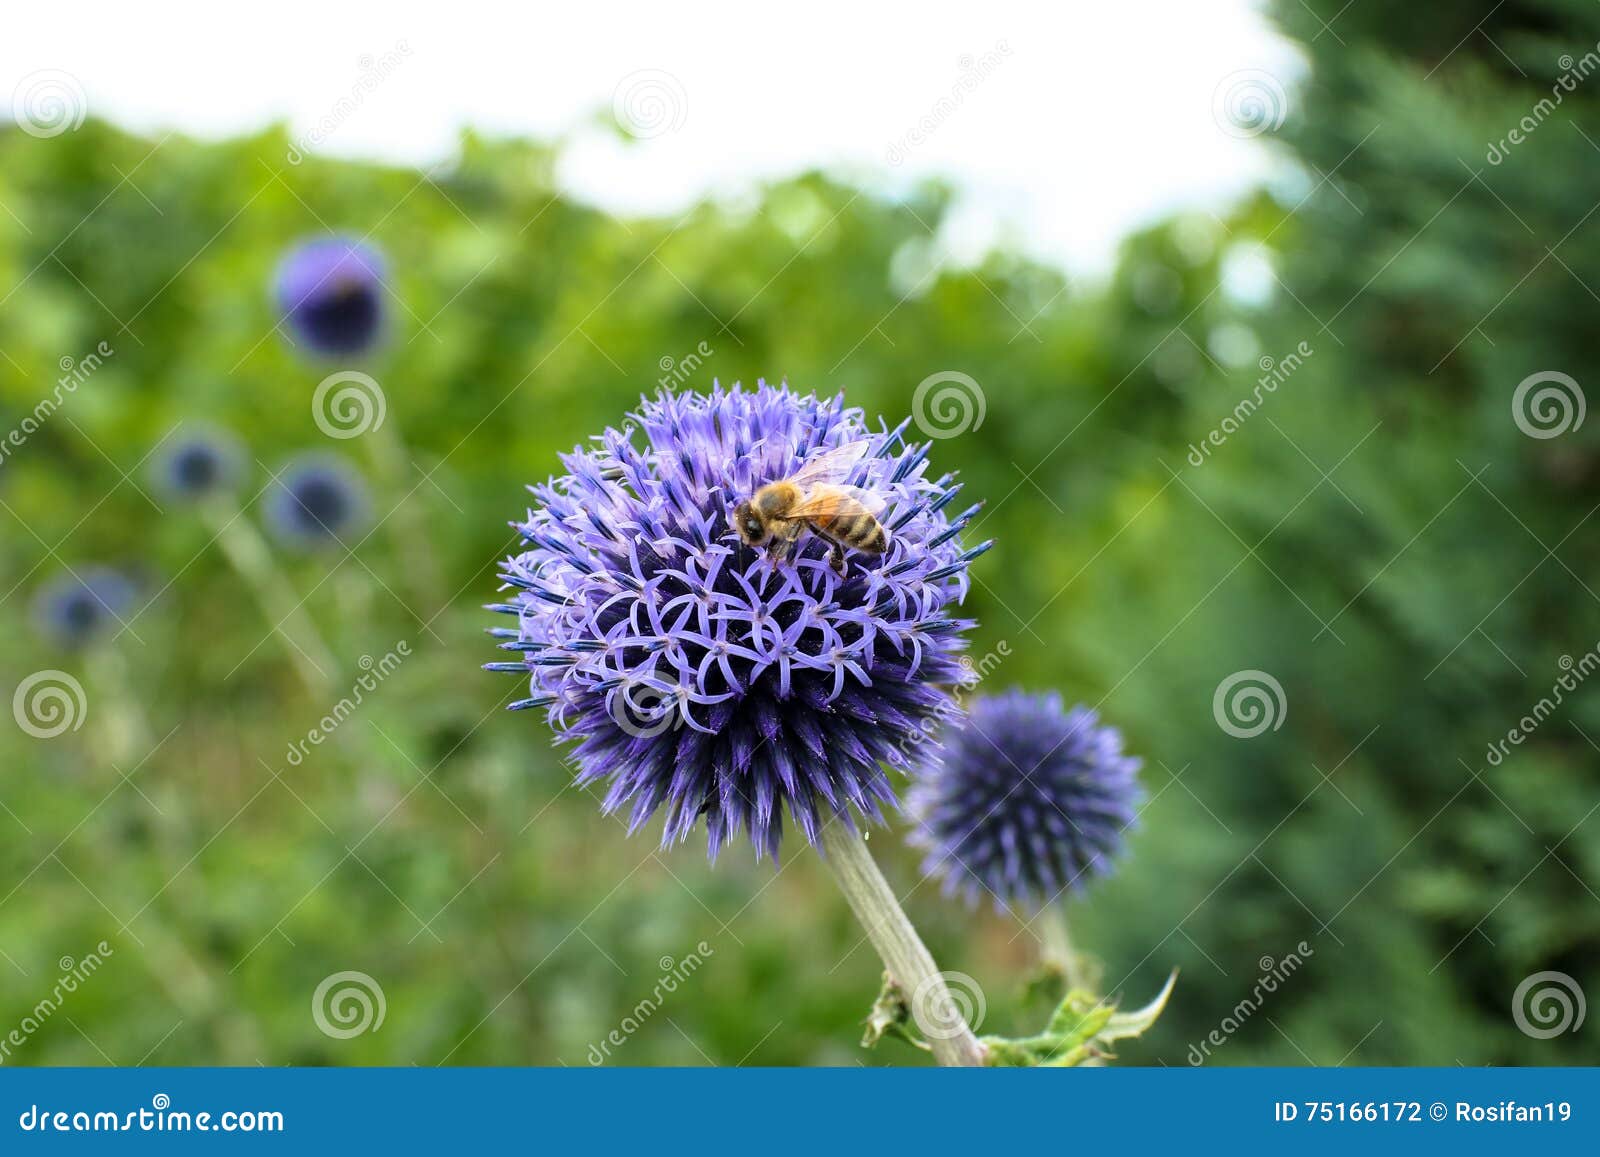 Cardo violeta foto de archivo. Imagen de hoja, flora - 75166172